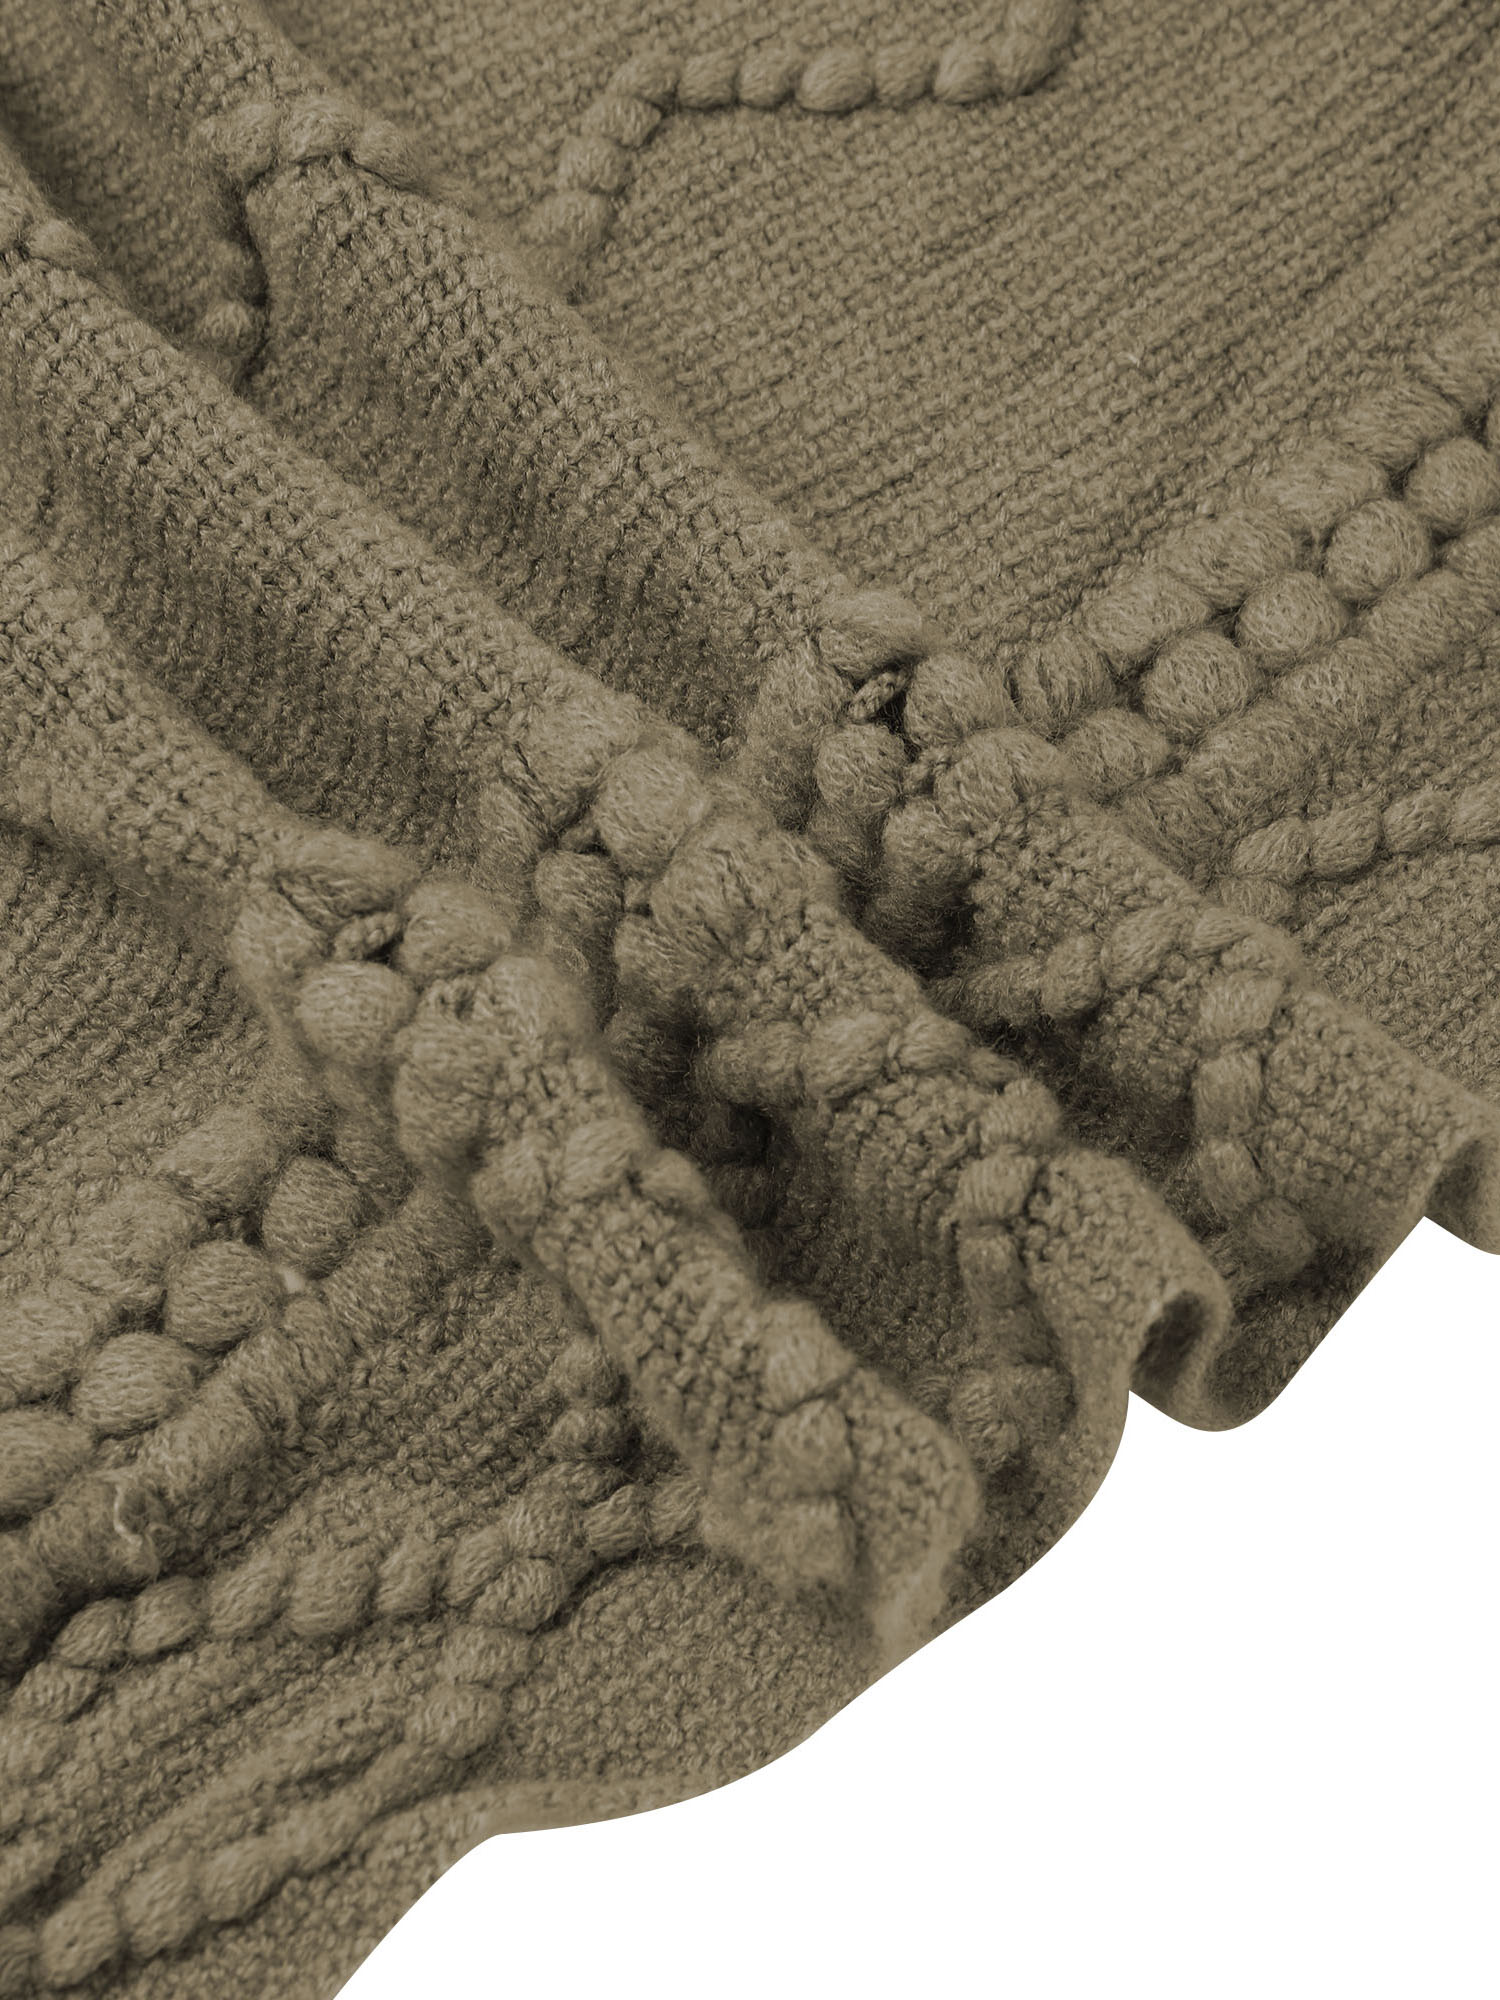 LELINTA Womens Knit Tassel Poncho Cardigan Fringed Pullover Cozy Sweater Wrap Jacket - image 4 of 4